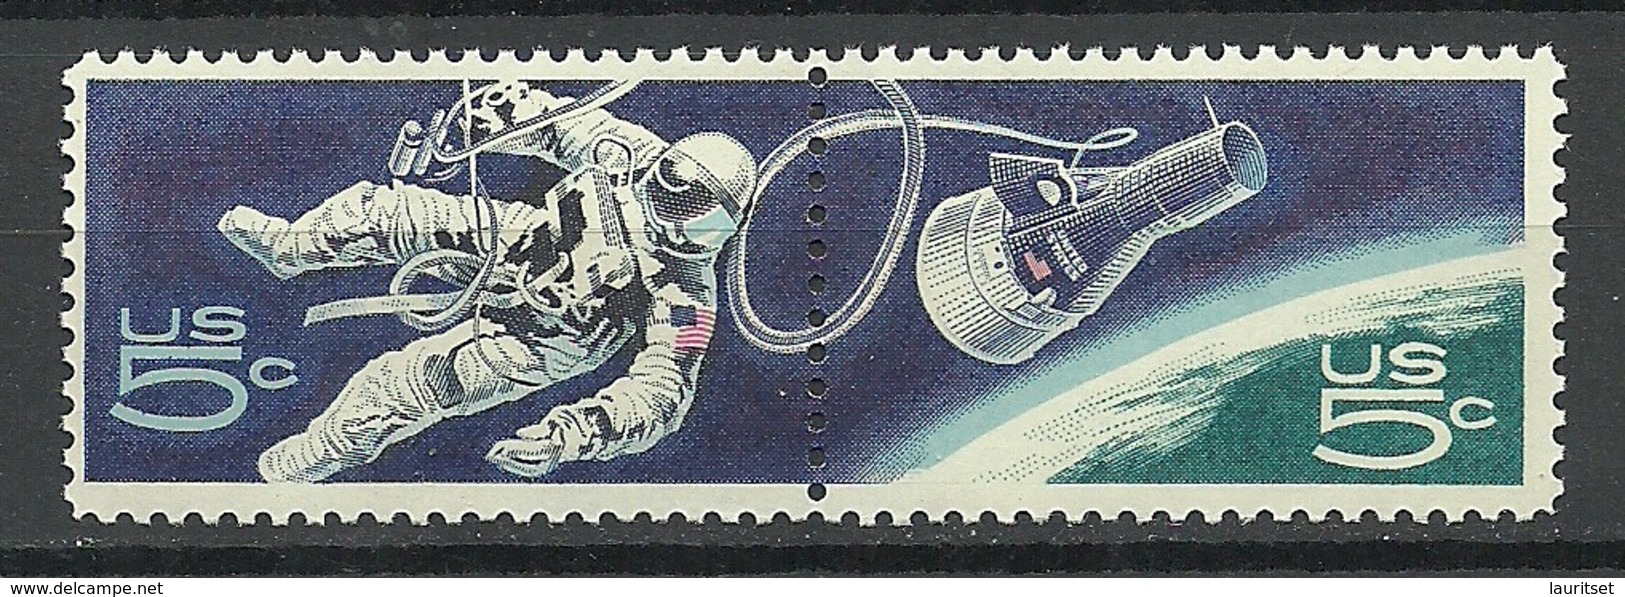 USA 1967 Michel 930 - 931 NASA Space Kosmonautik Weltraum Raumfahrt Astronaut MNH - United States